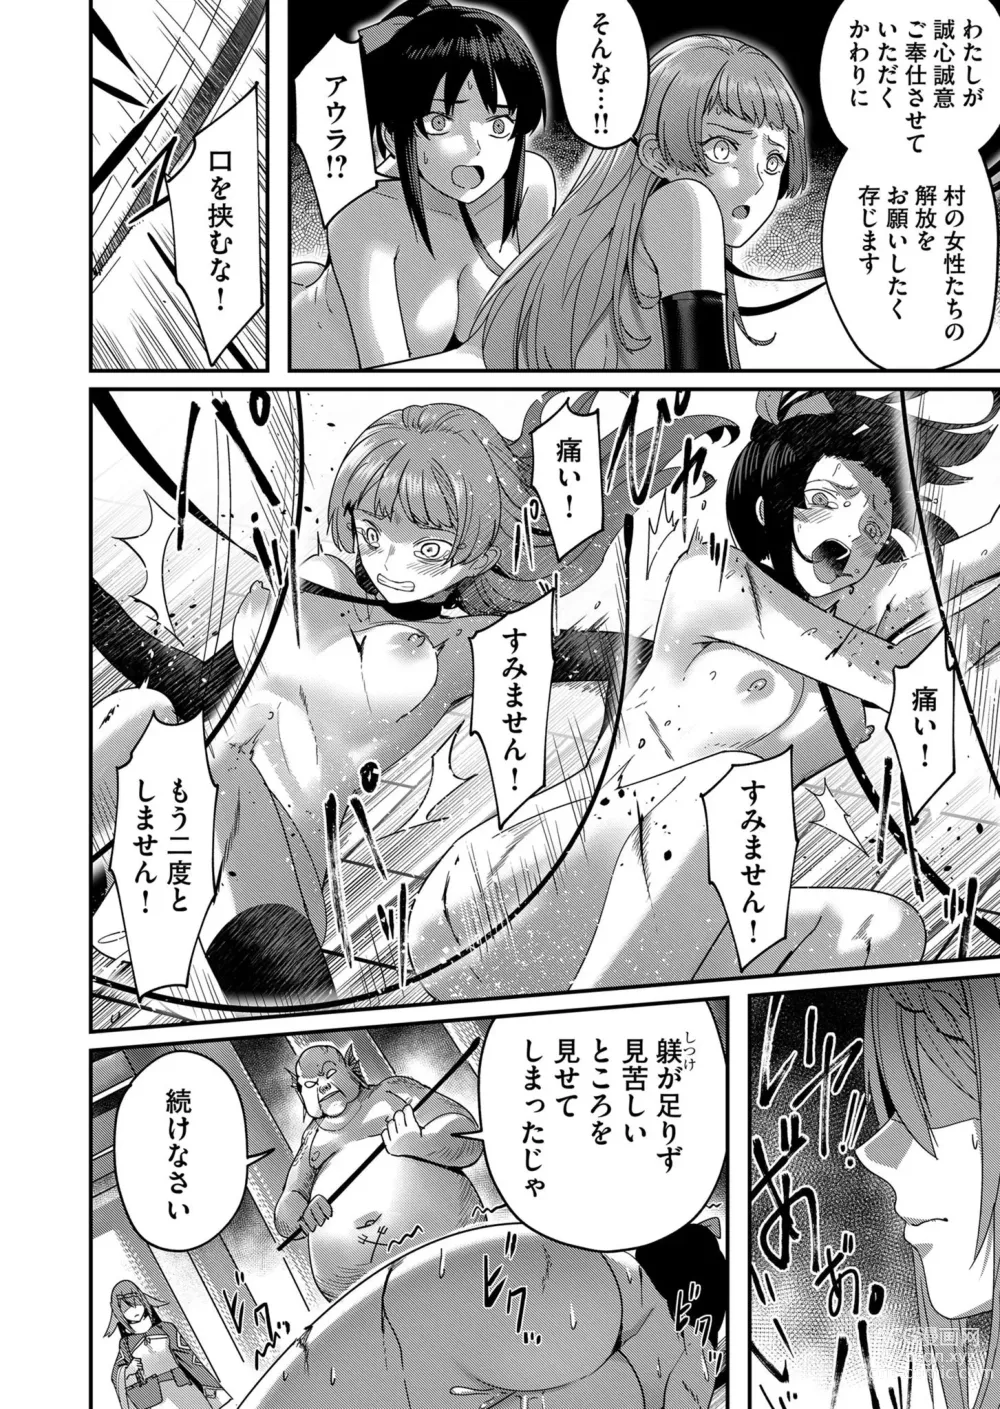 Page 170 of manga Kichiku Eiyuu Vol.01